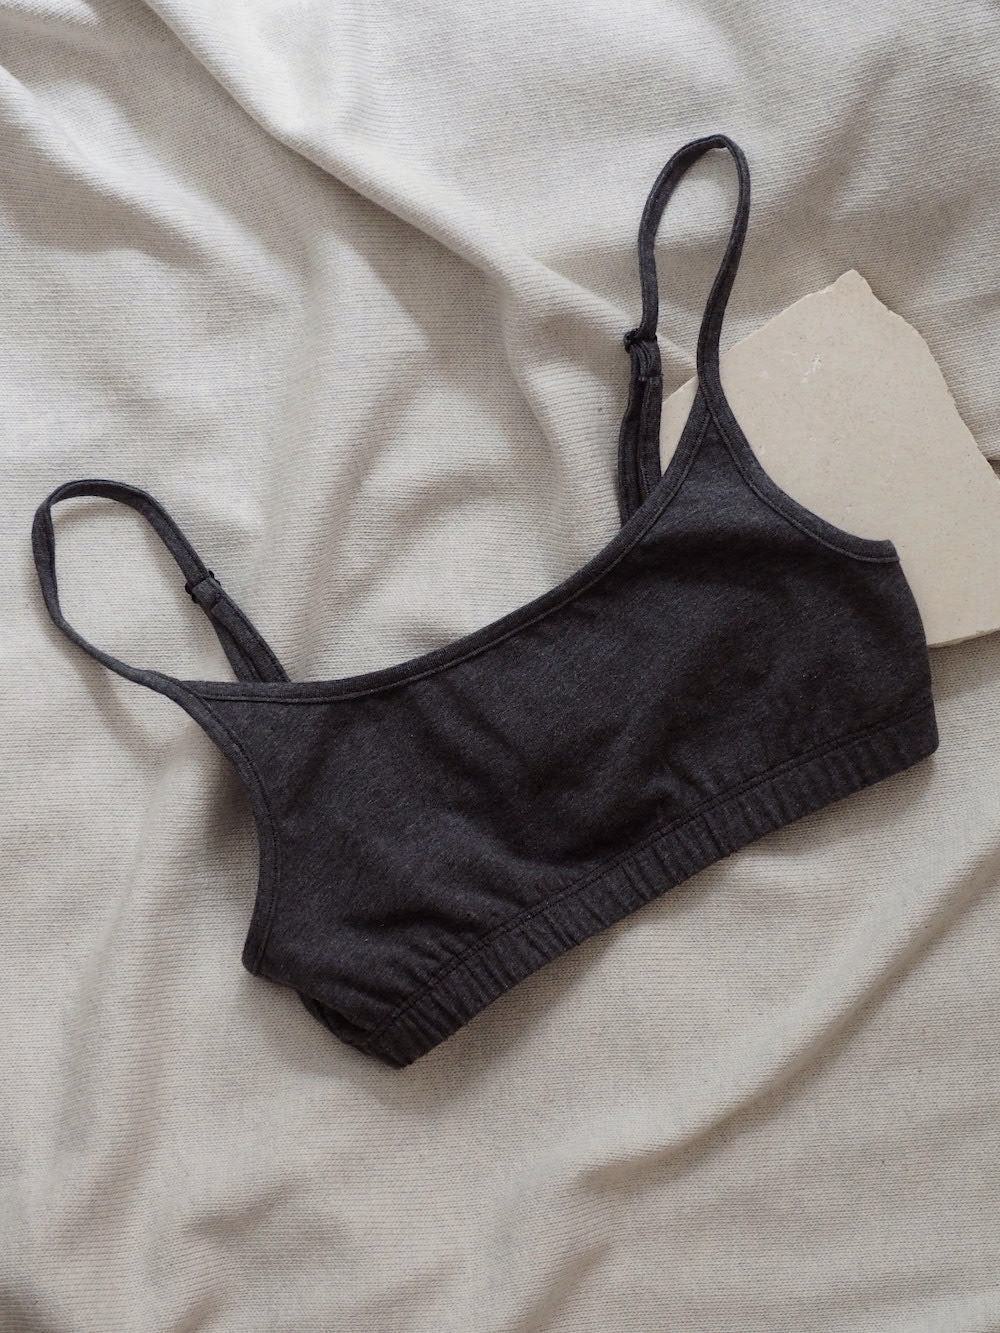 Gap body bra and panties bundle NWT